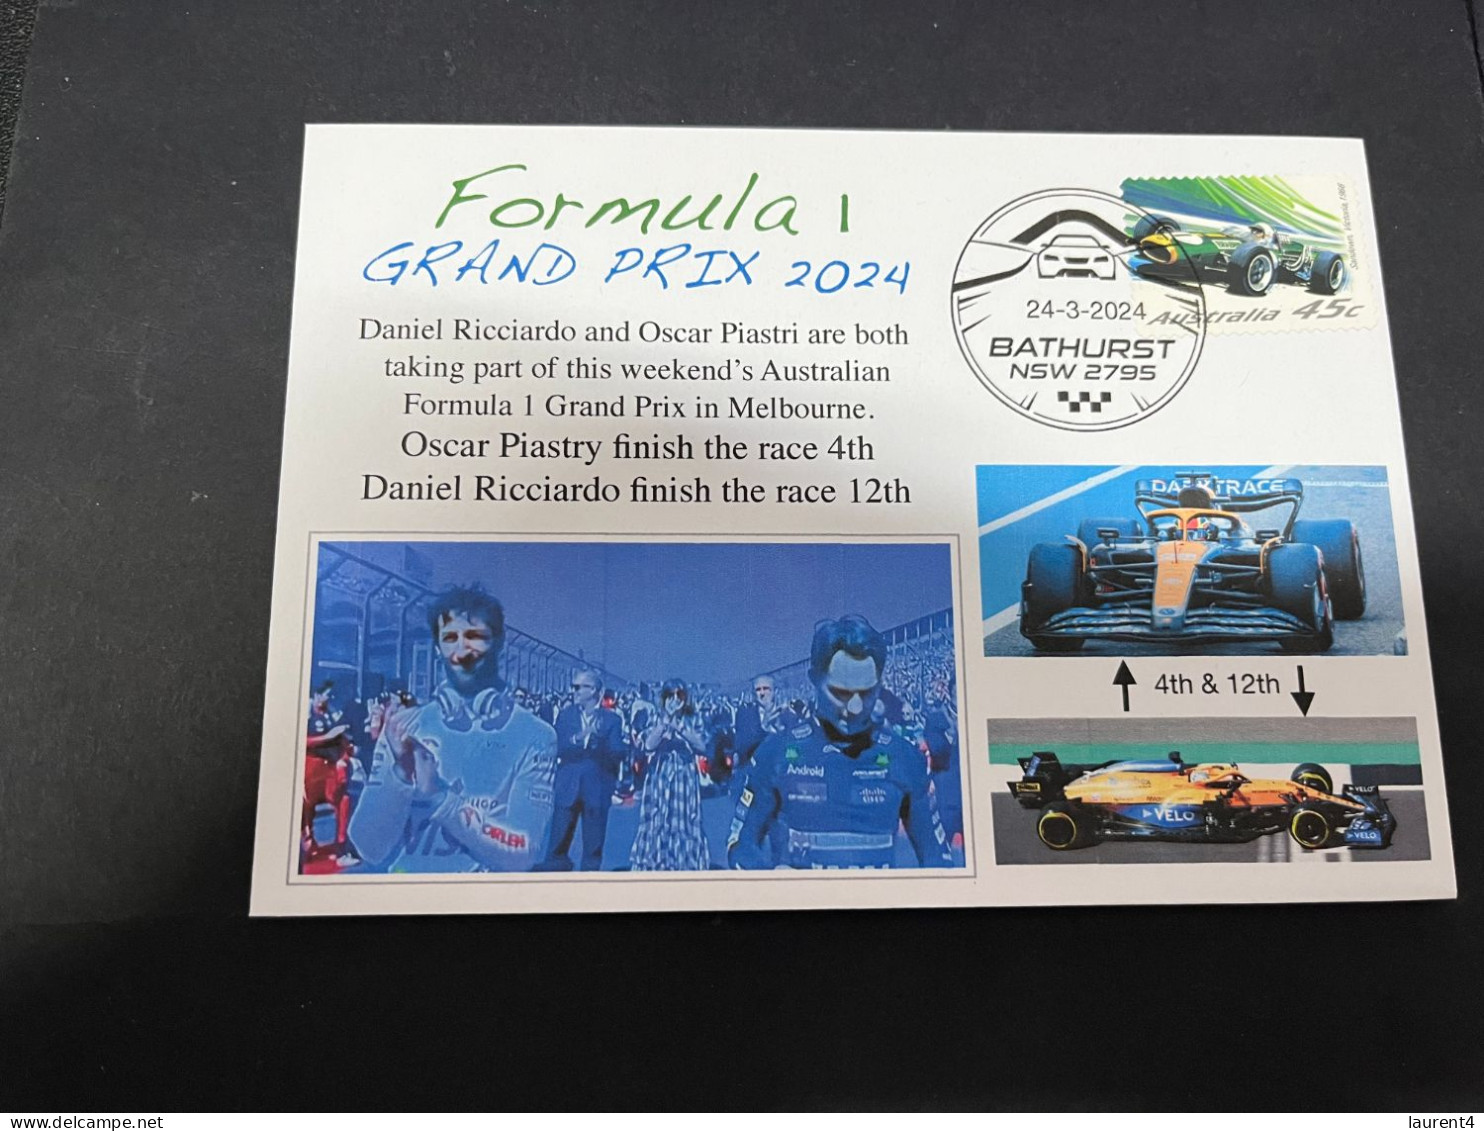 25-3-2024 (4 Y 2)  2024 Australia Grand Prix - Formula 1 Stamp - Oscar Piastry (4th) & Daniel Ricciardo (12th) Finish - Cars